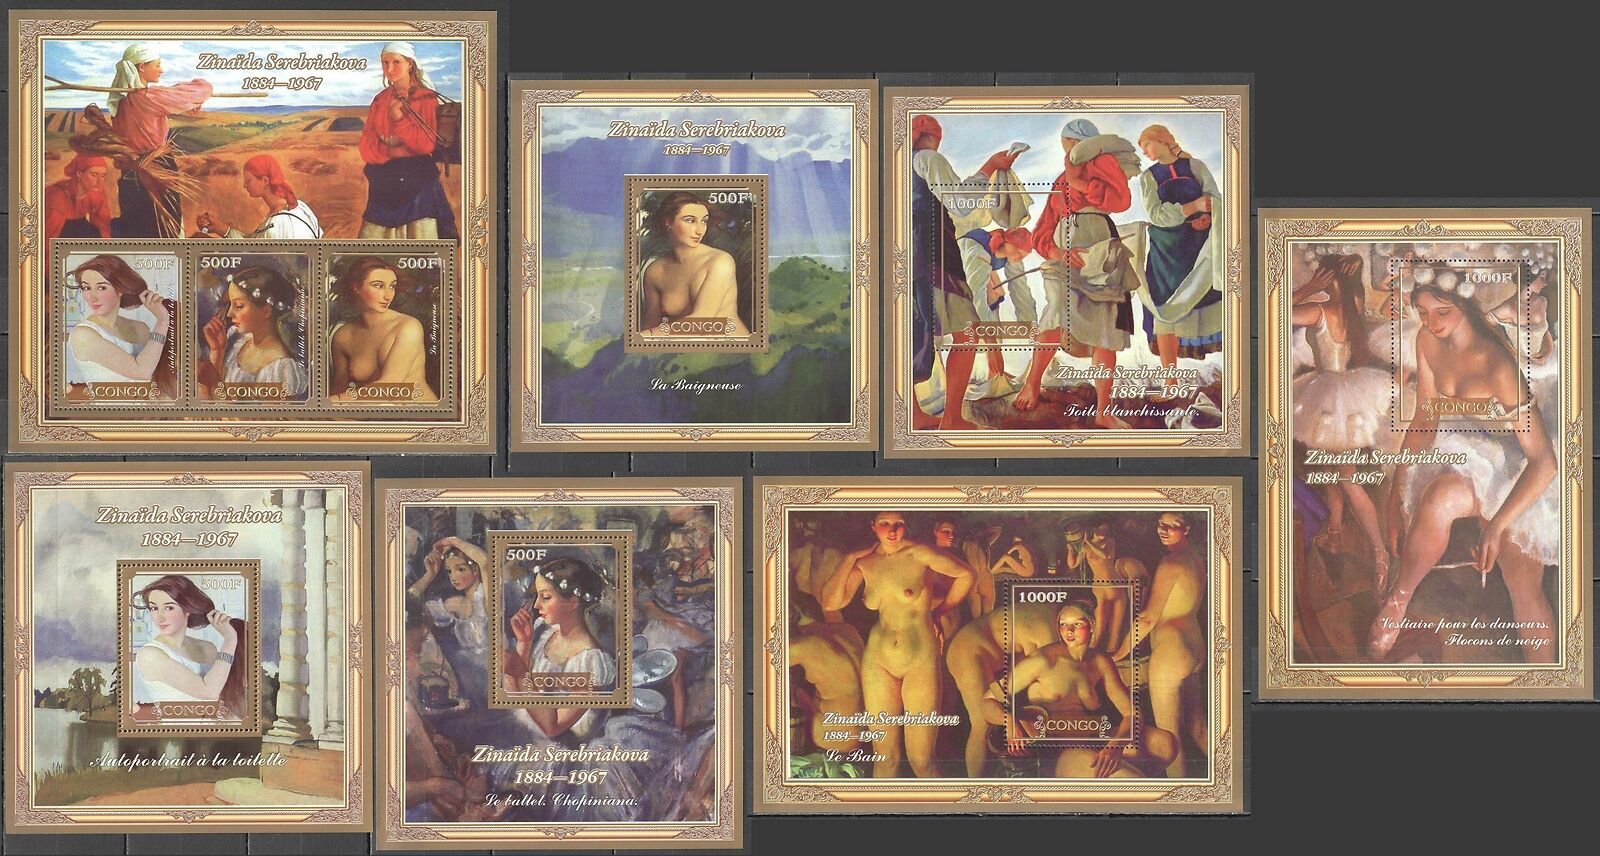 Paint famozs erotic art Erotic Art